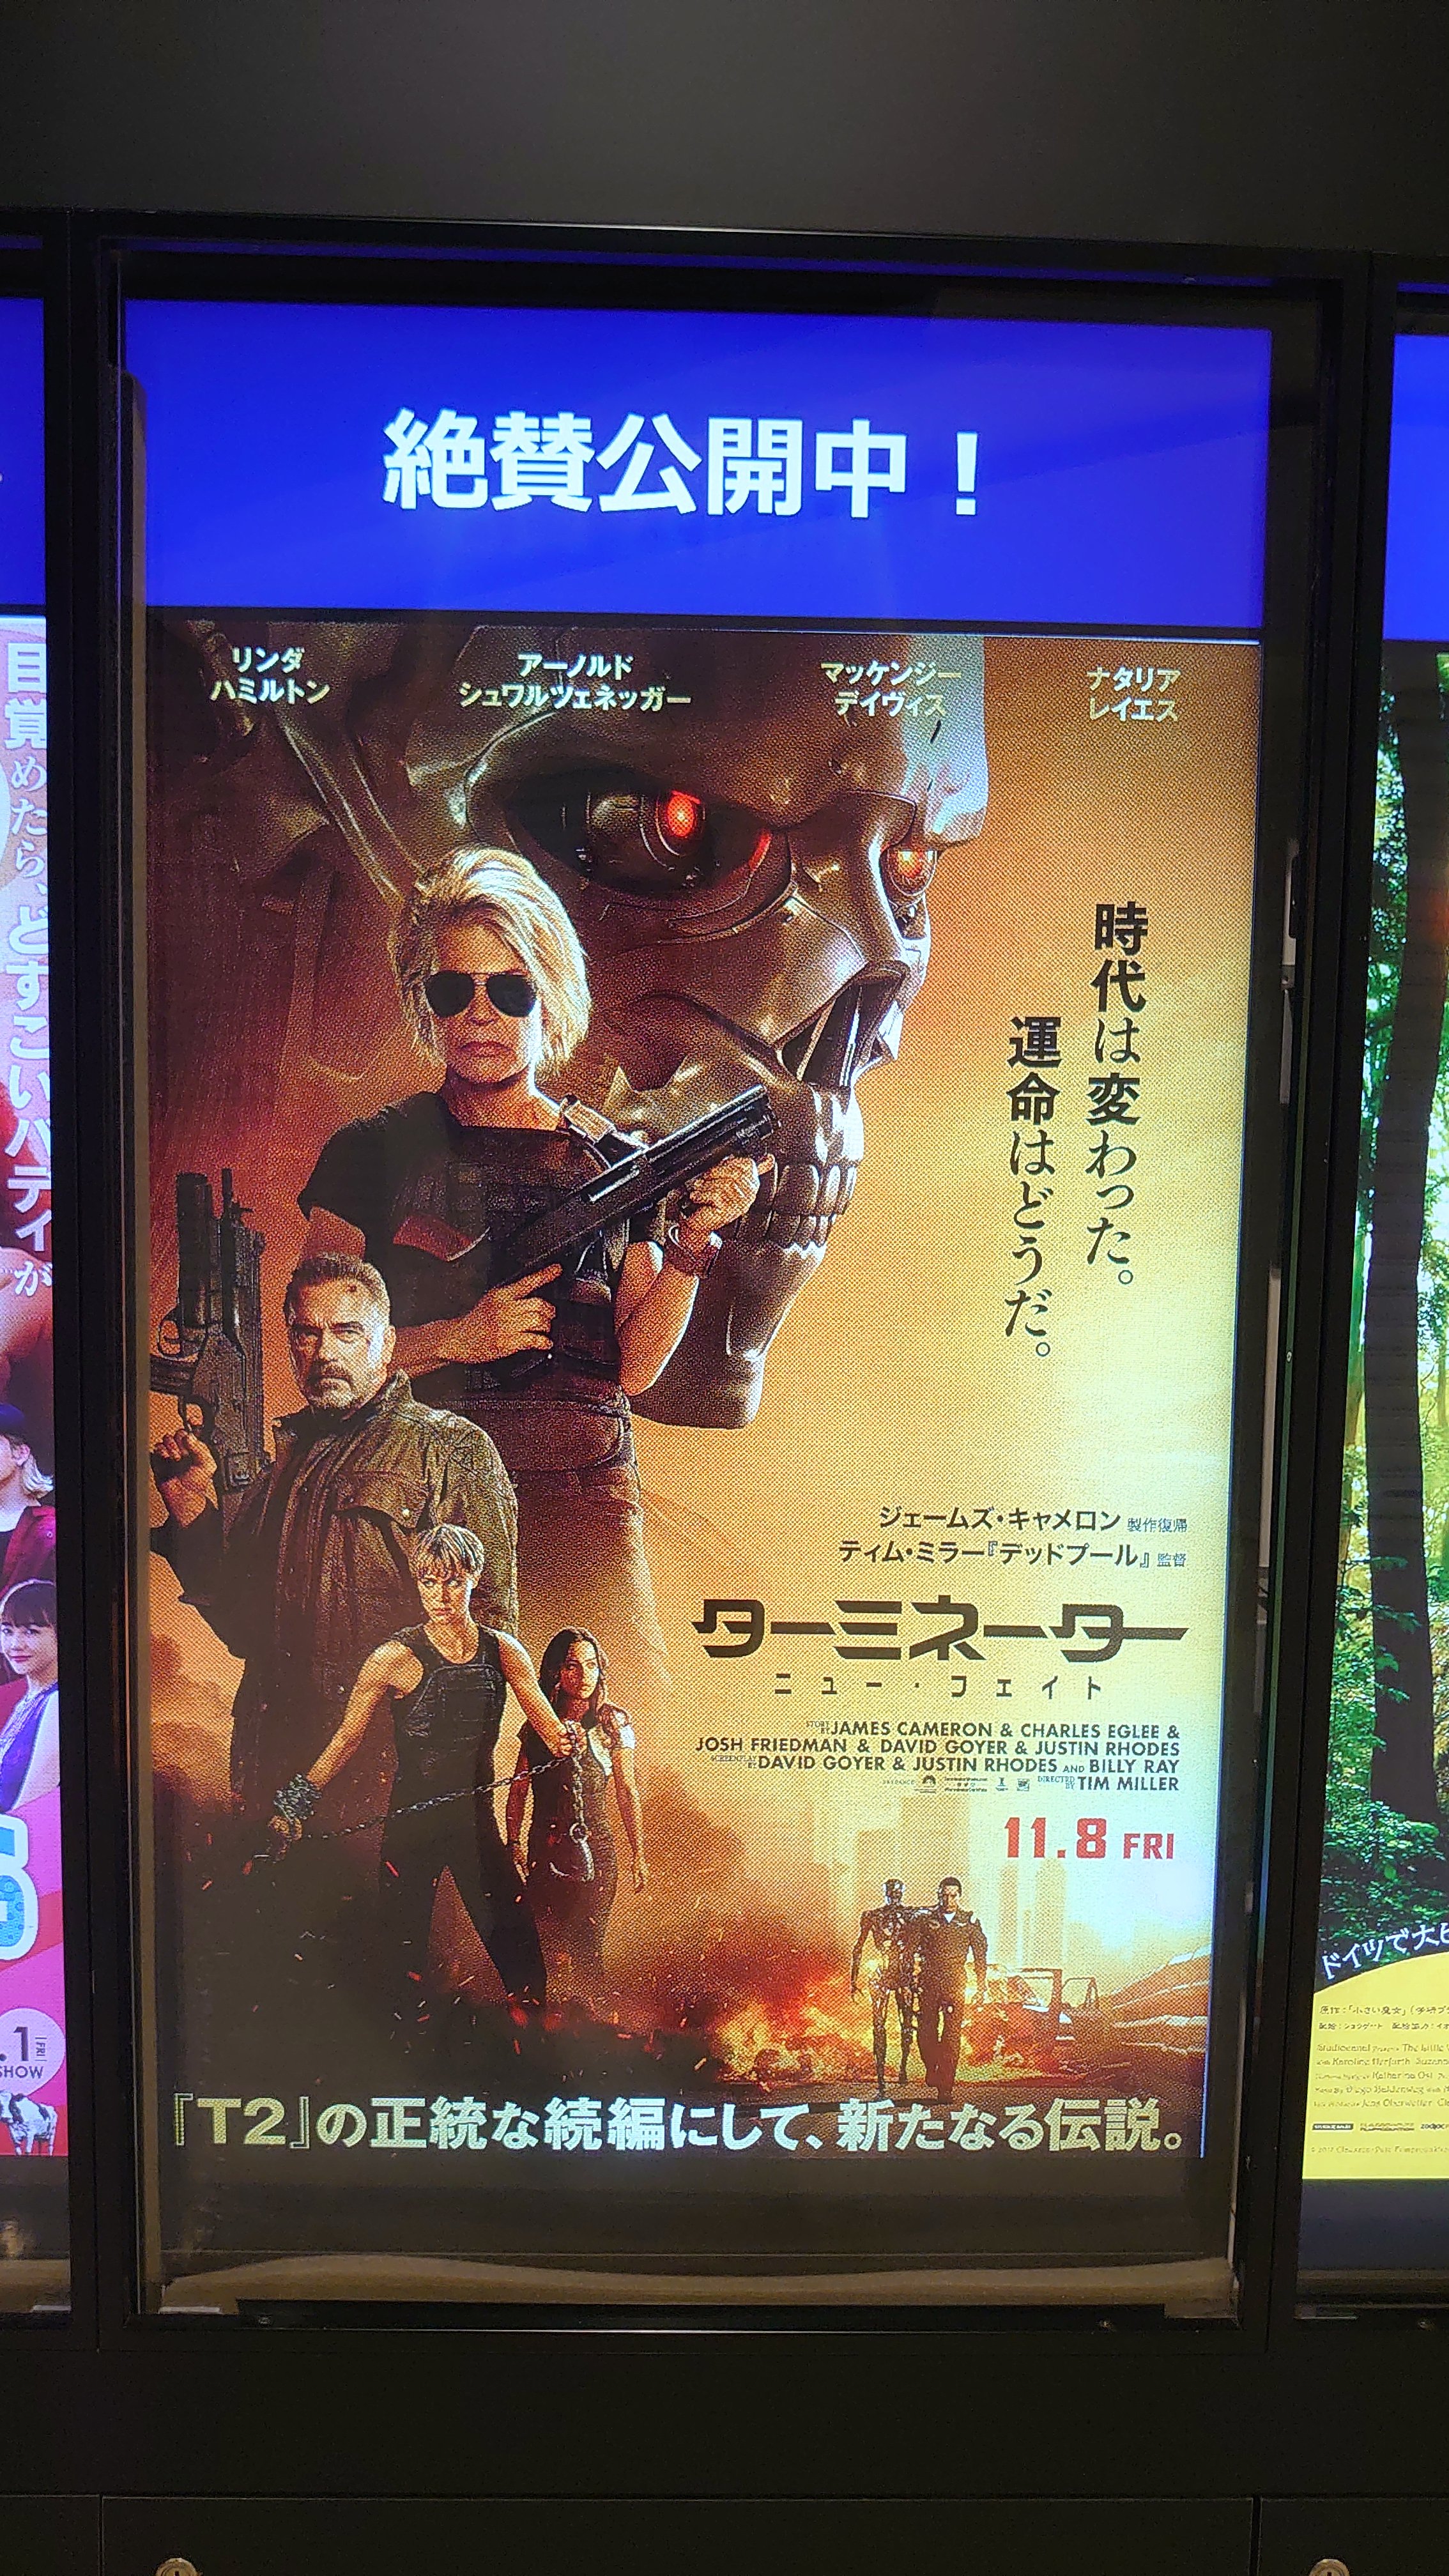 Terminator: Dark Fate 日本題名「ニュー・フェイト」